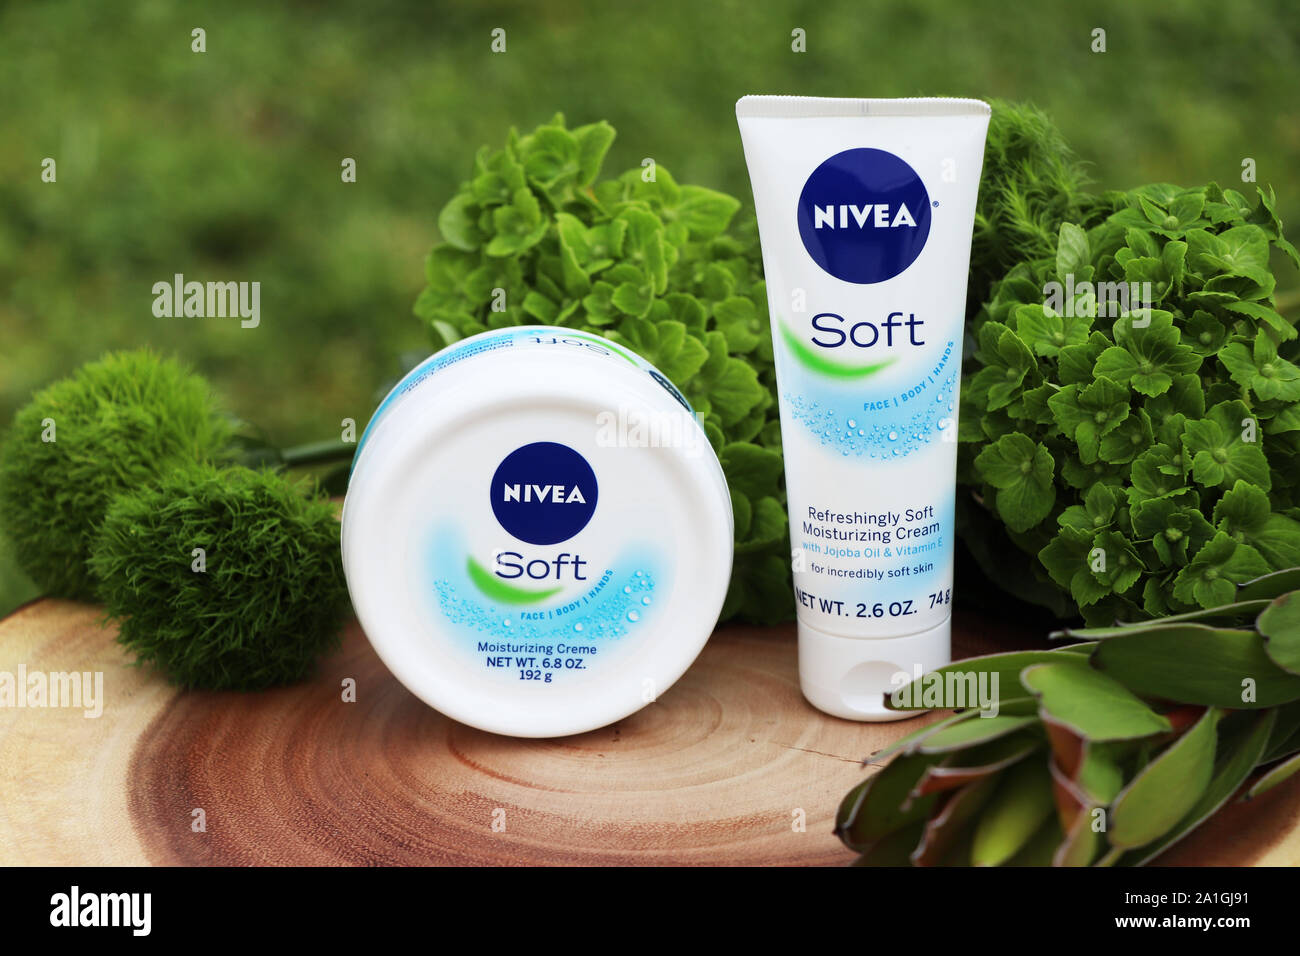 Nivea Soft Products Stock Photo - Alamy